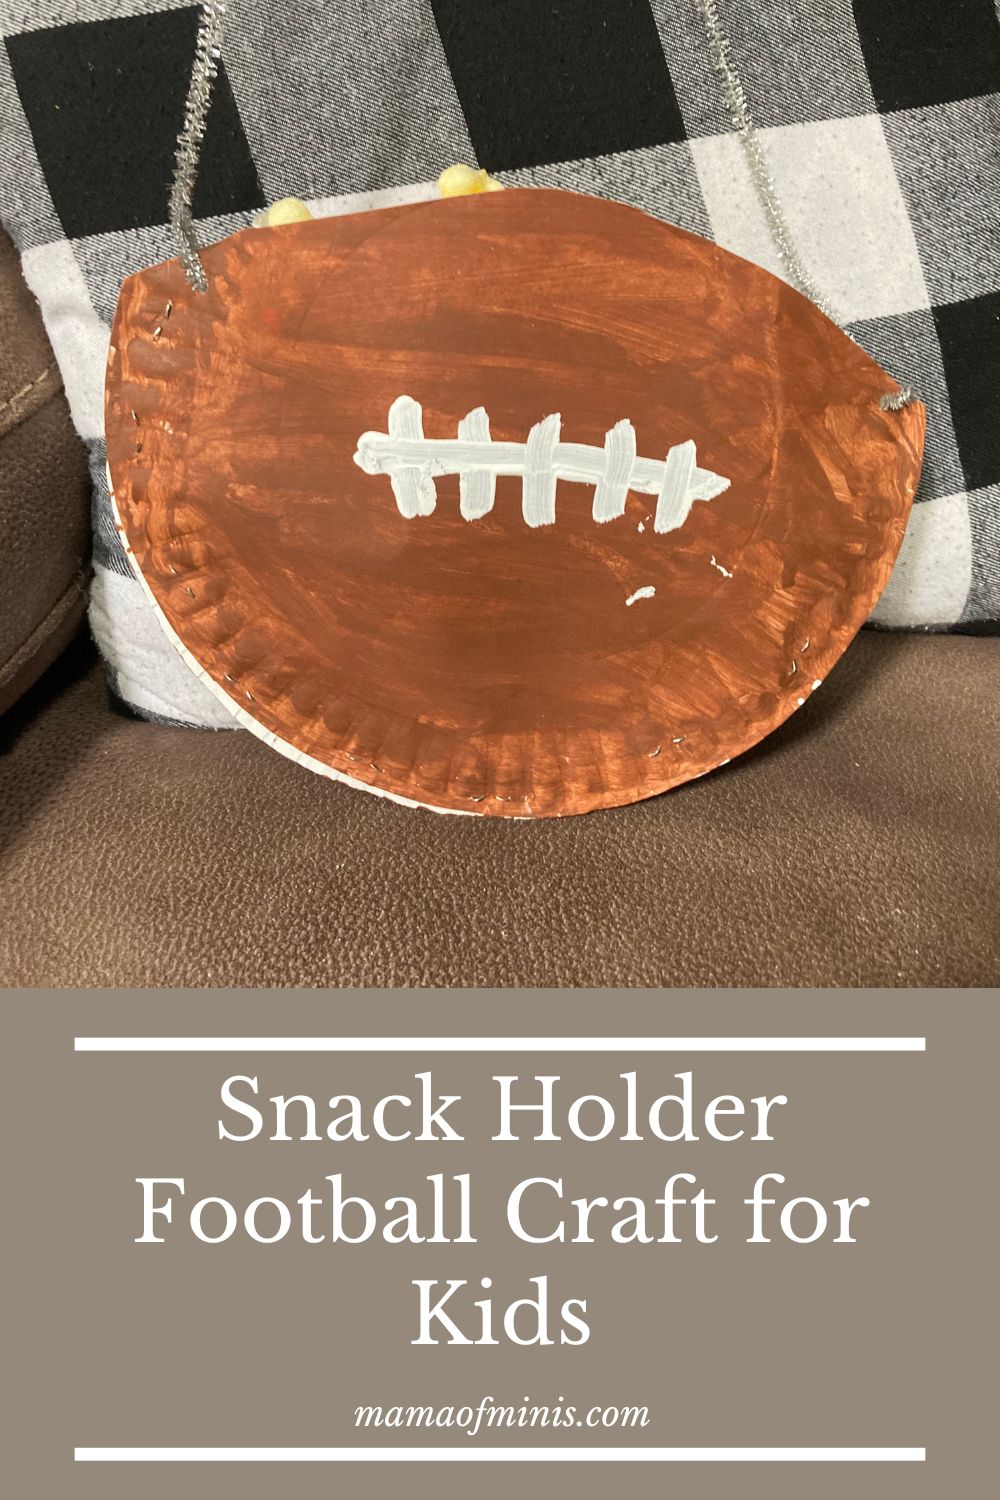 Snack Holder Football Craft for Kids